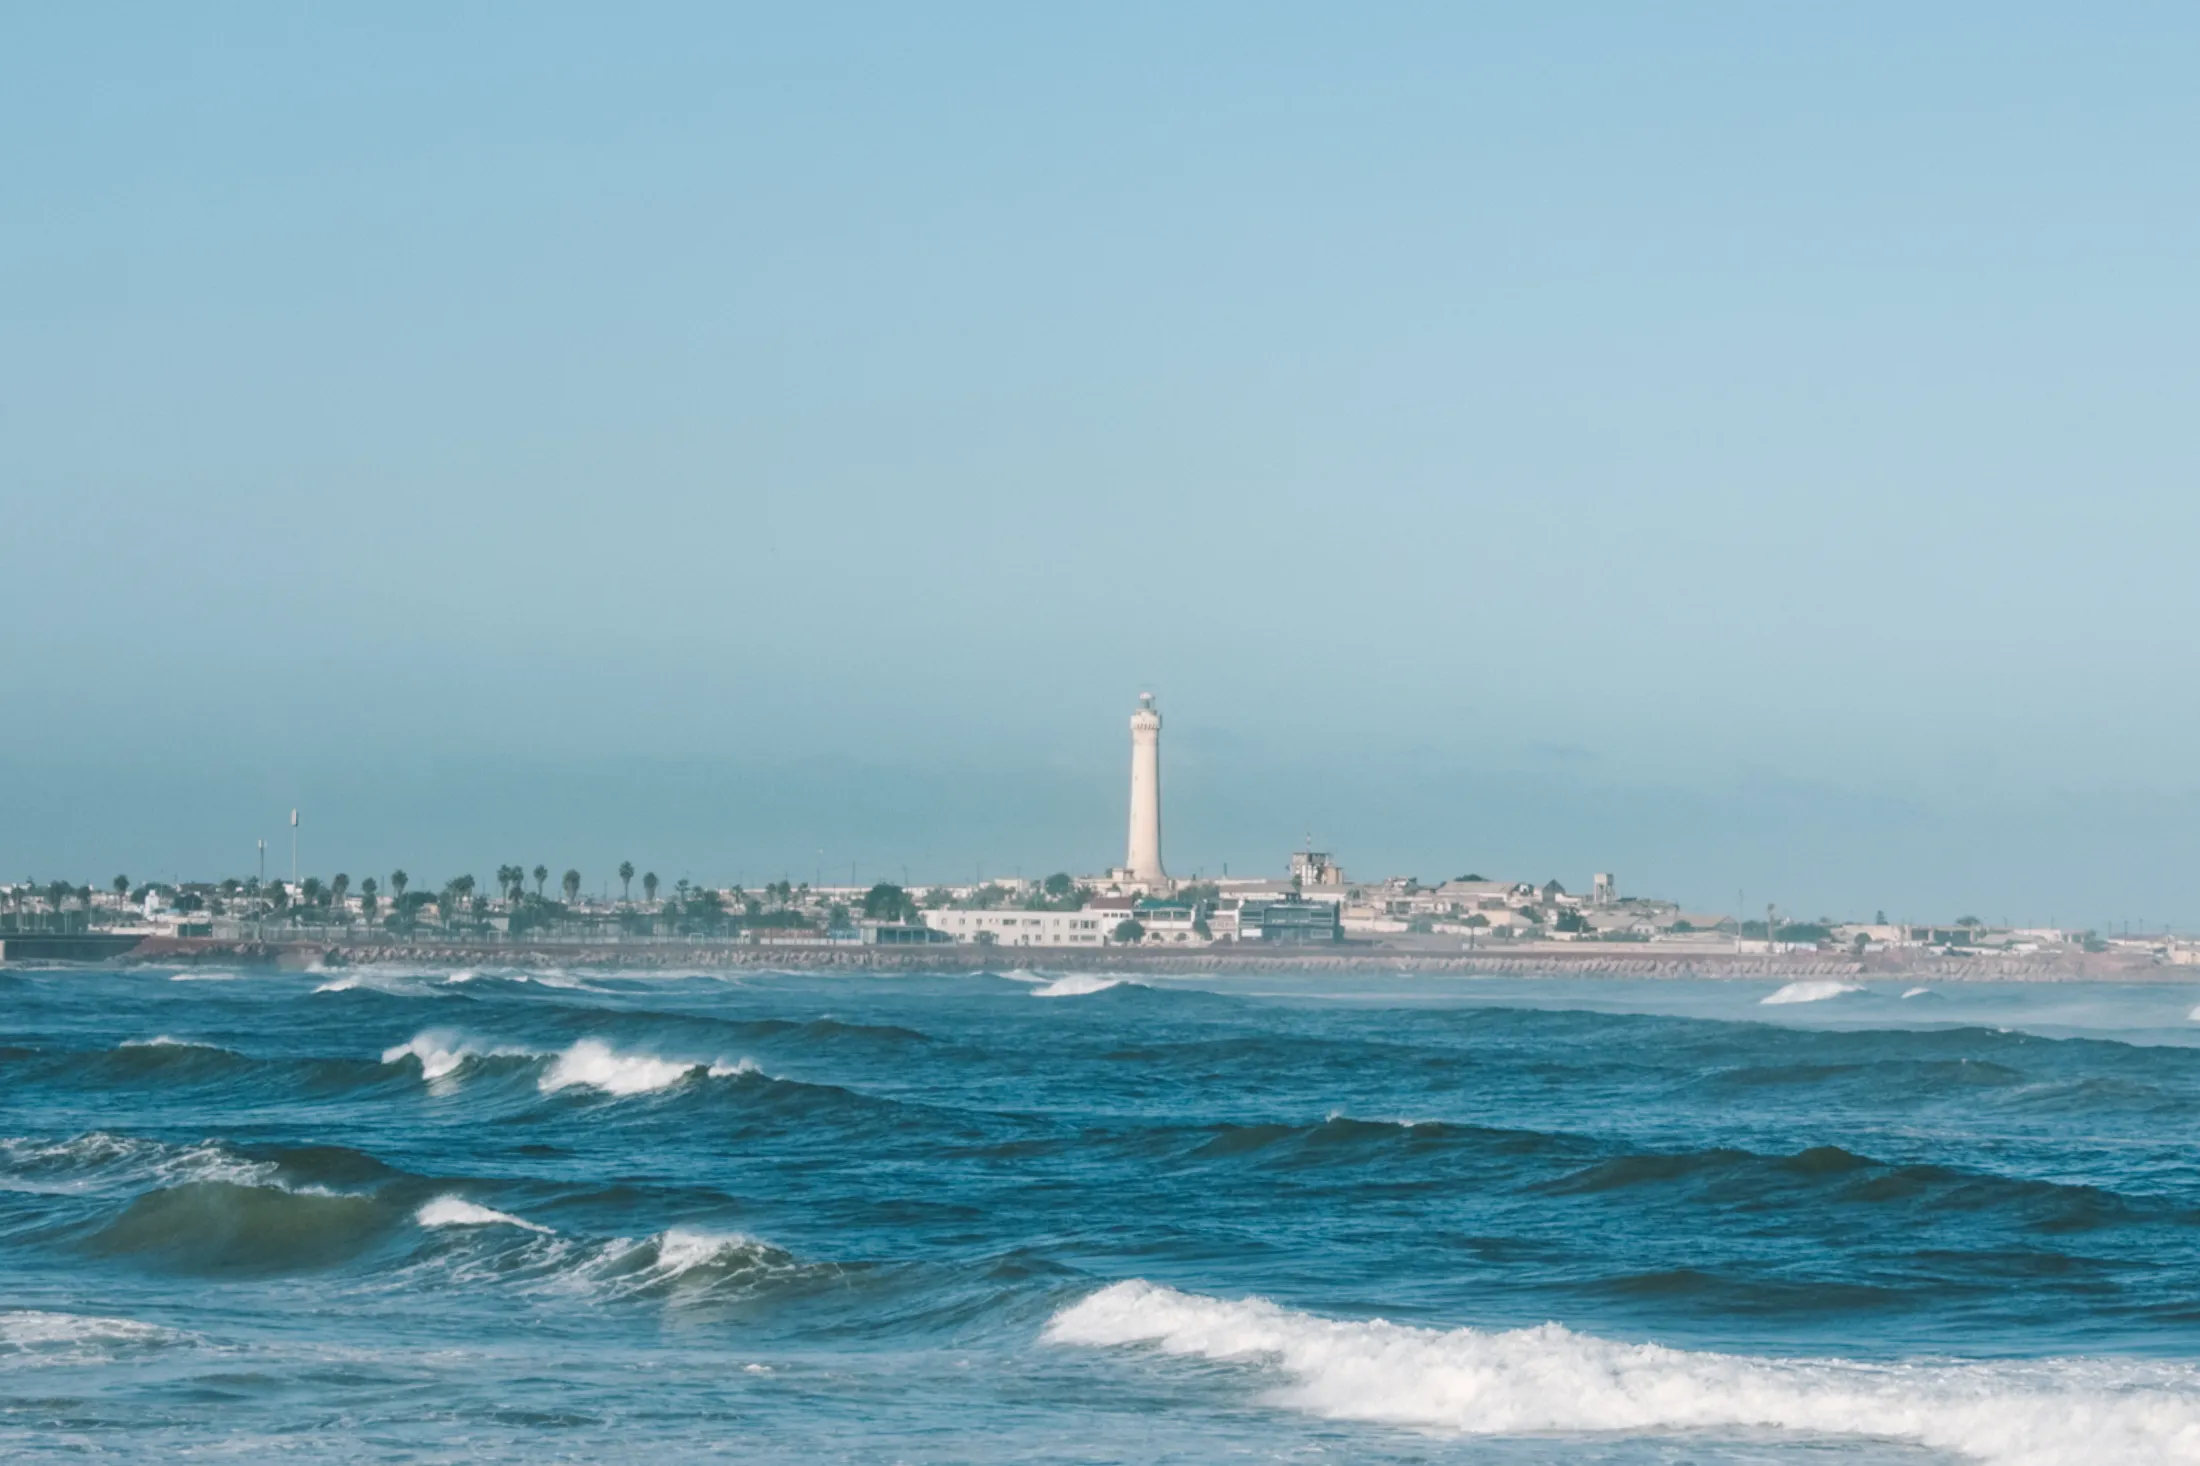 Atlantic Ocean view of the lighthouse in Casablanca, Morocco.